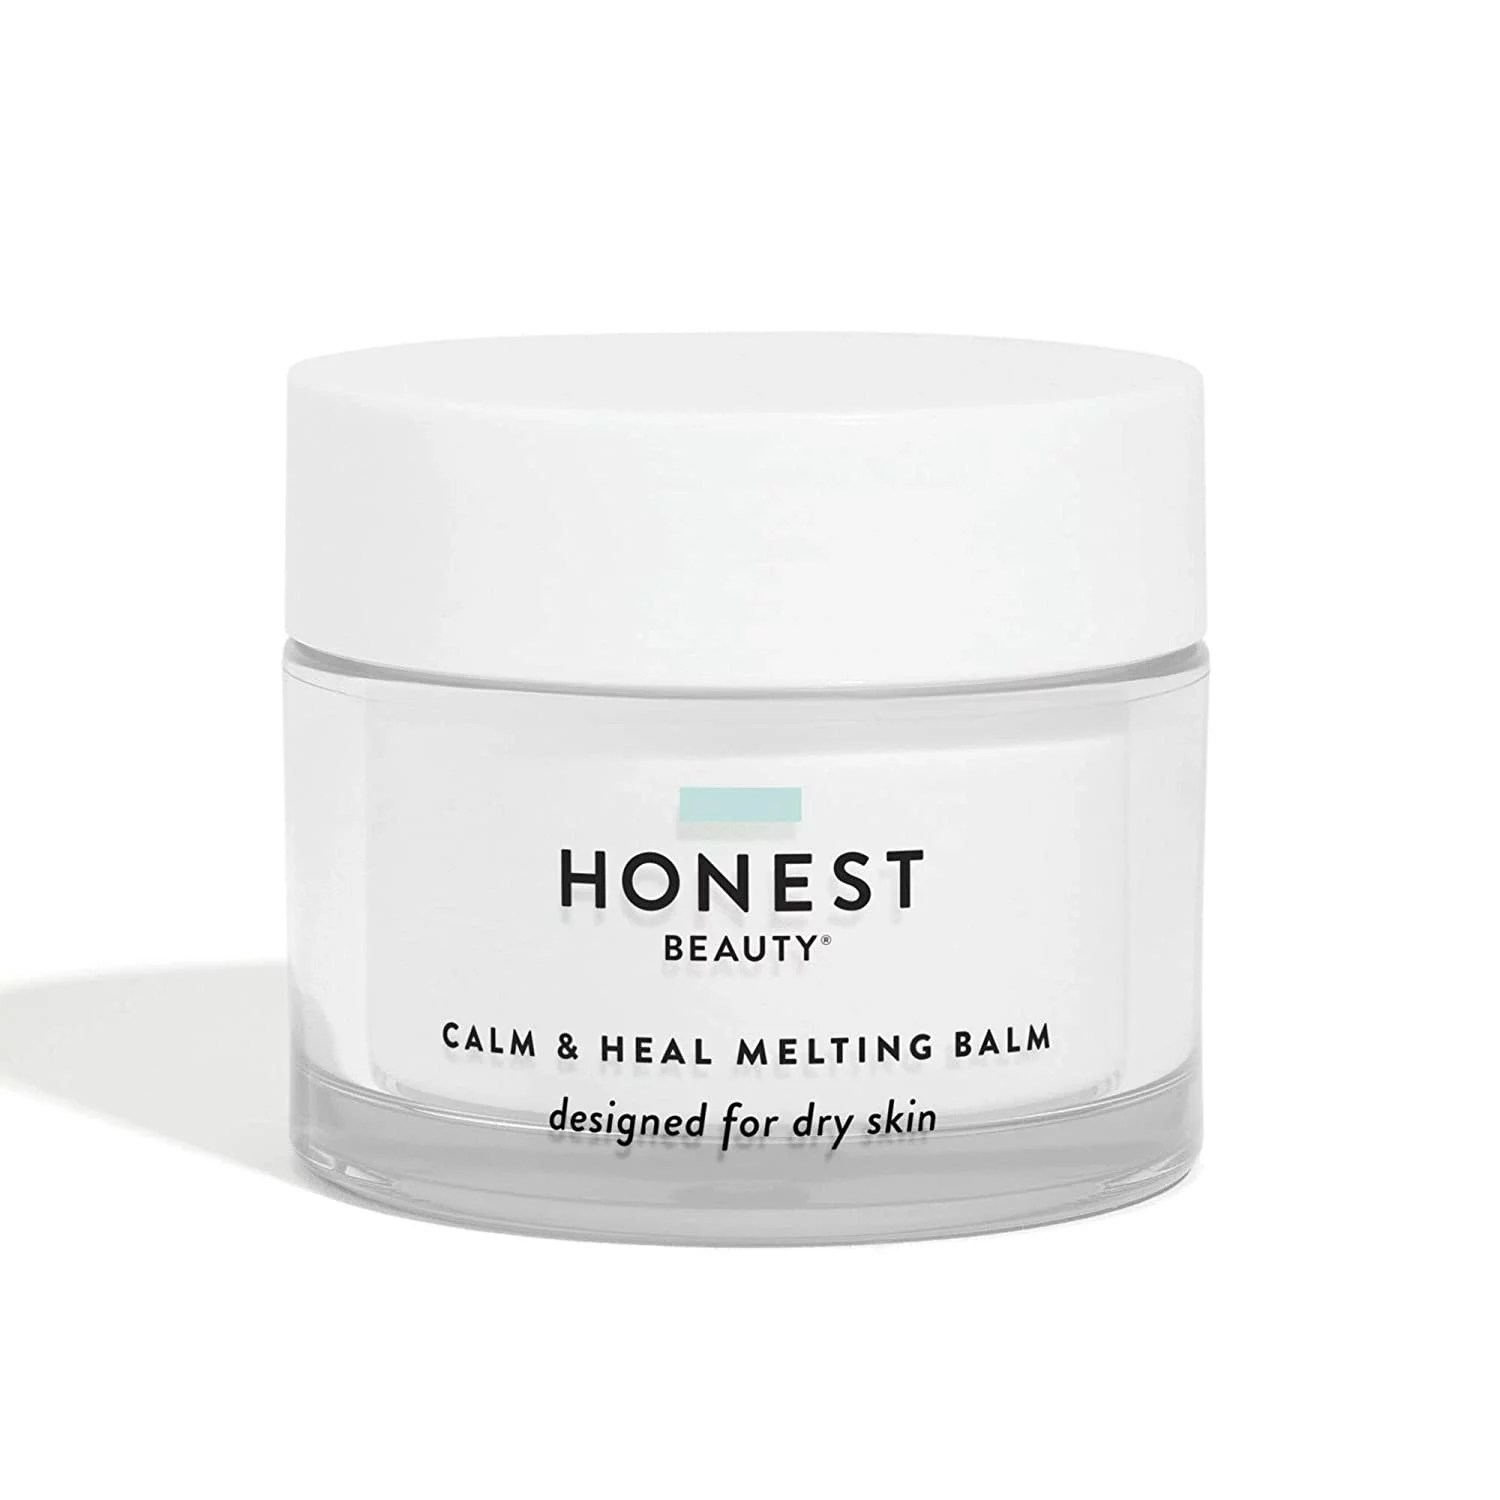 Honest Beauty Calm & Heal Melting Balm, Amazon Winter Skin-Care Sale